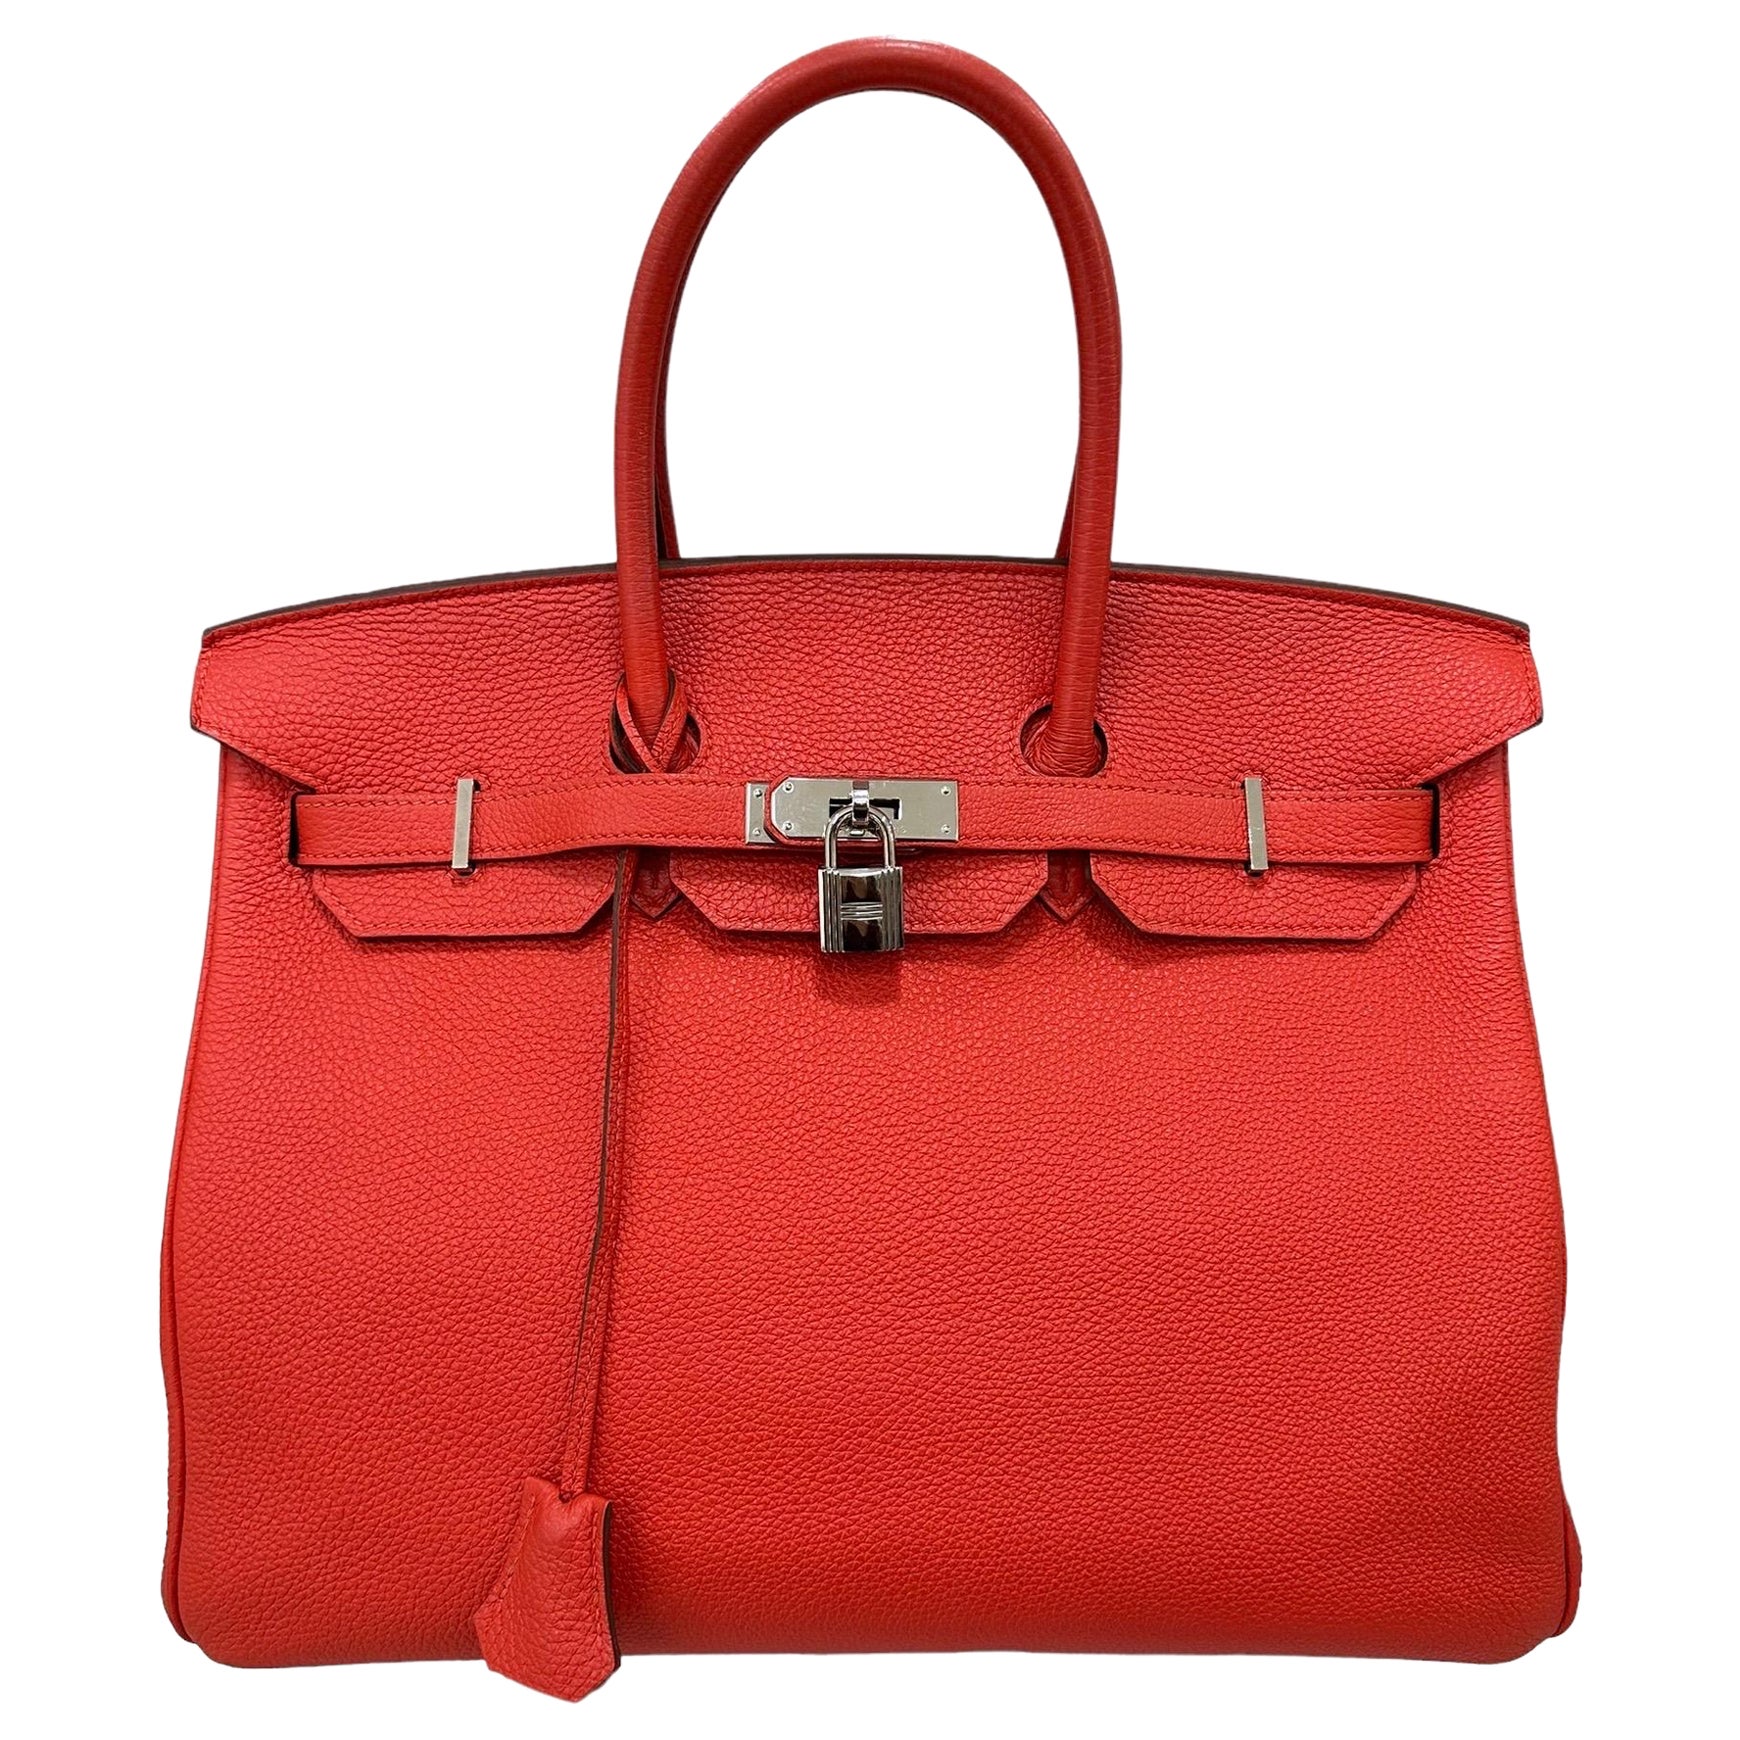 2011 Hermès Birkin 35 Togo Leather Rouge Capucine Top Handle Bag For Sale